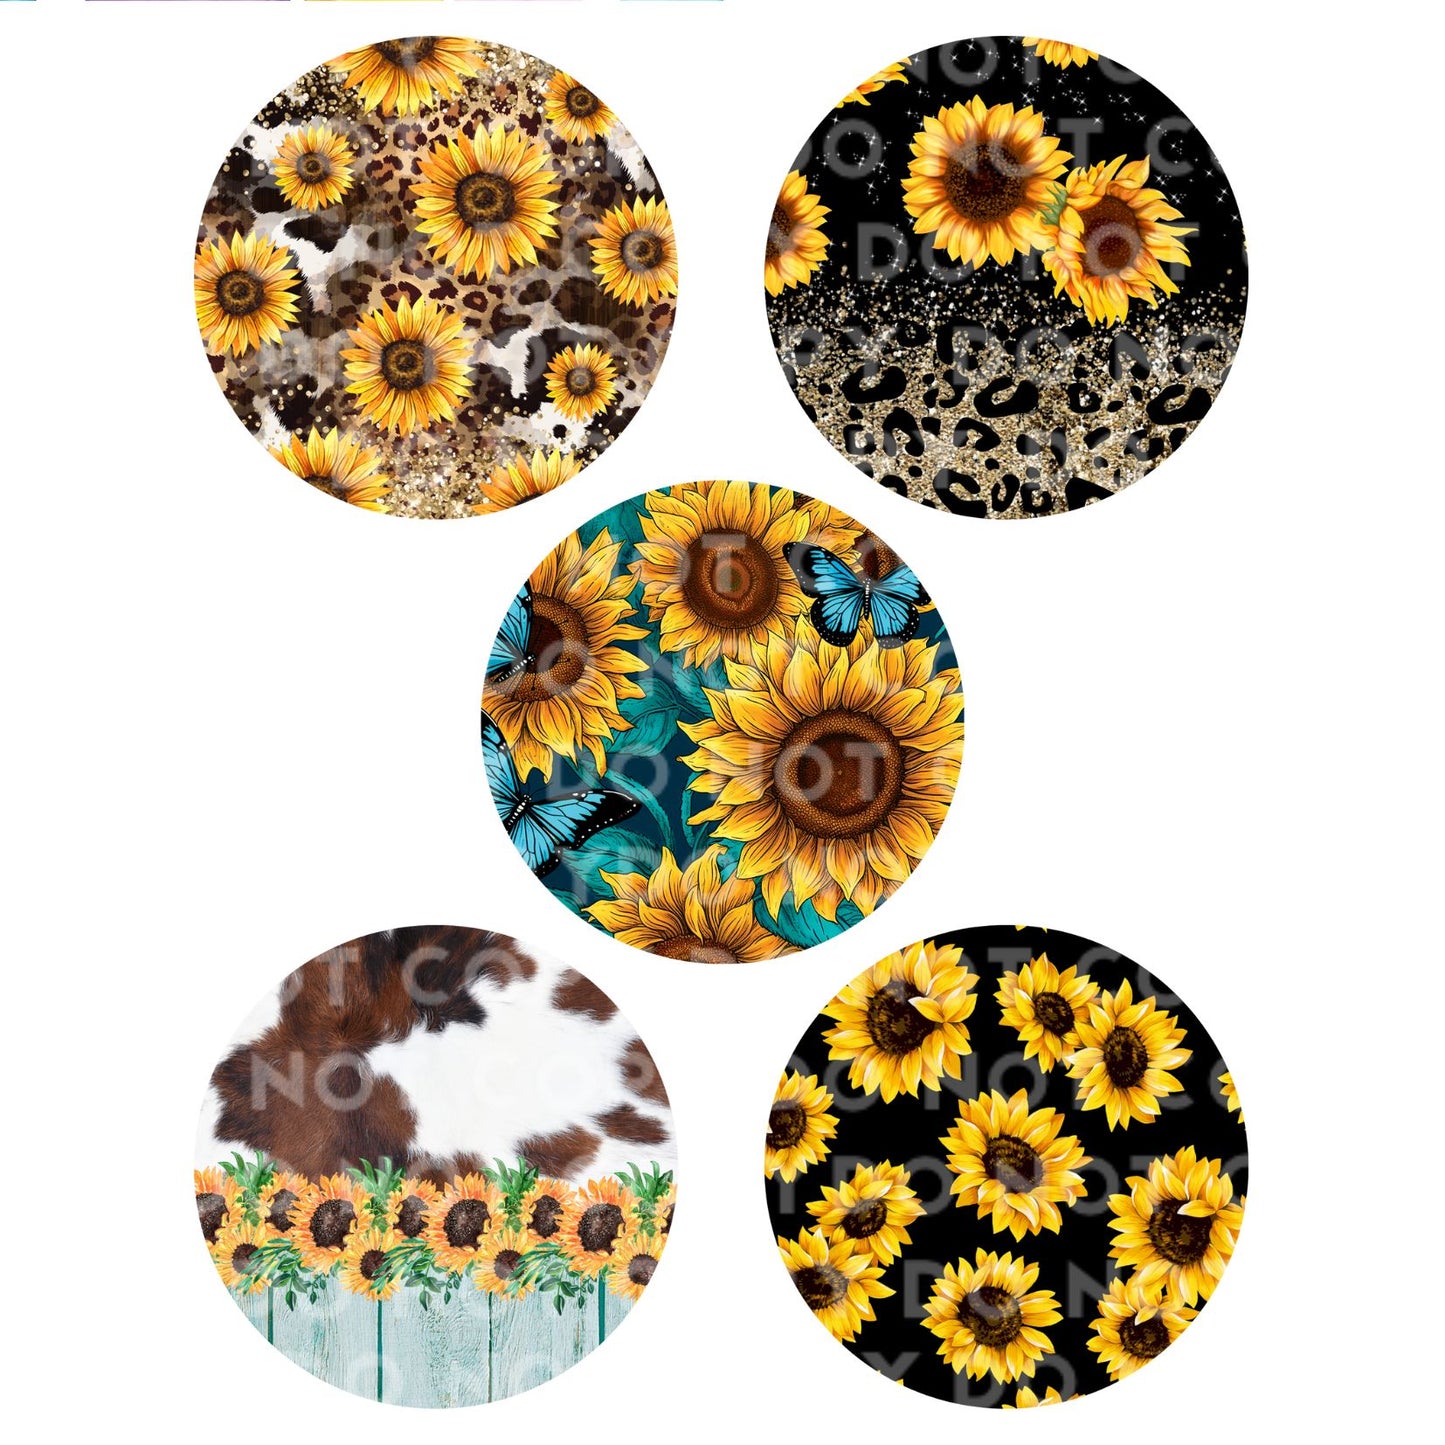 Sunflowers Car Air Freshener & 4 inch Coaster Sublimation Print